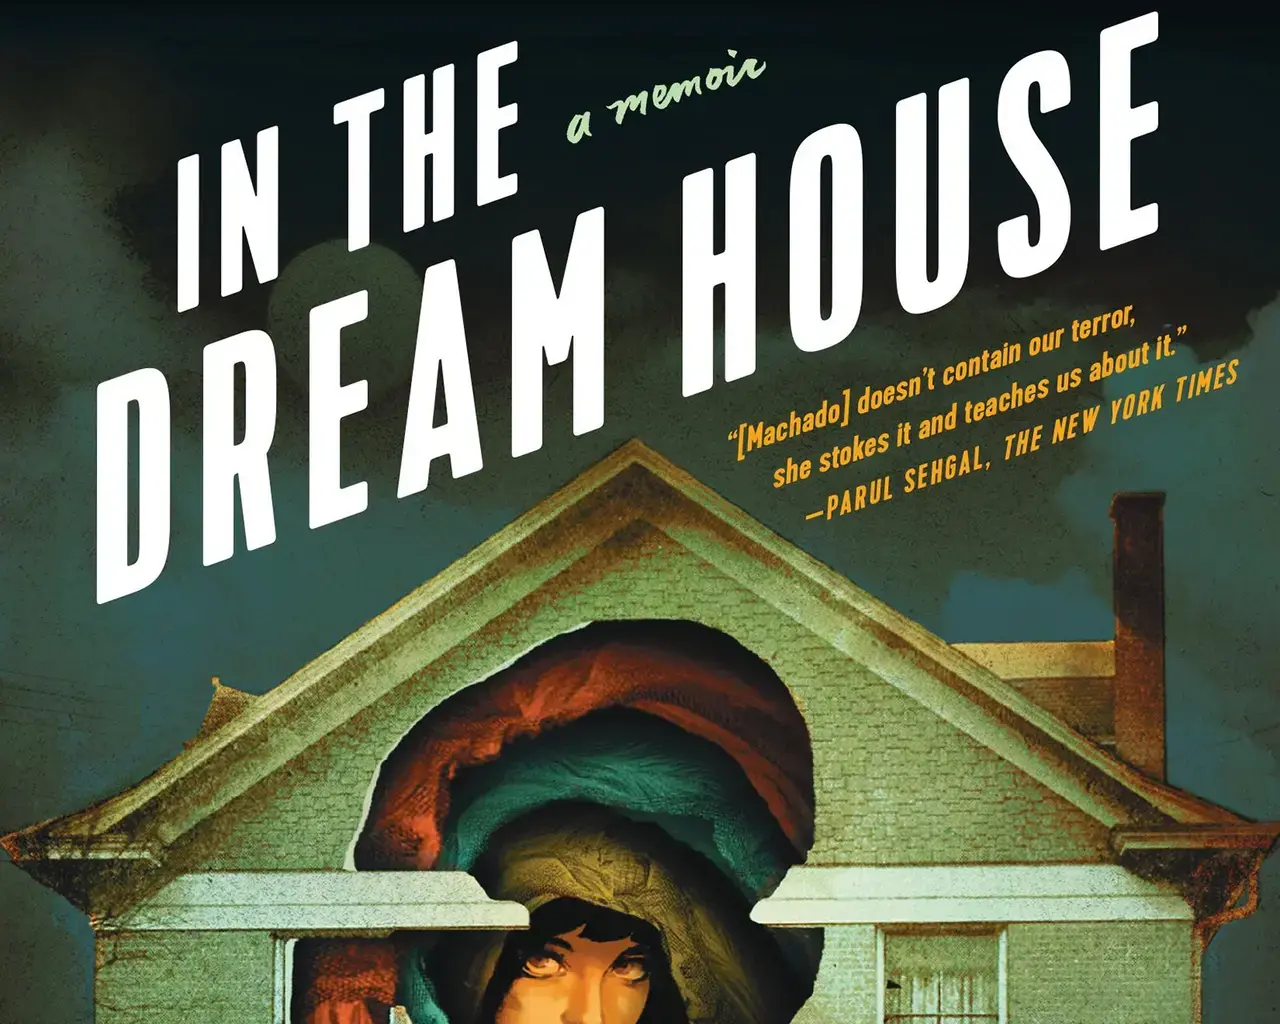 Book cover for "In the Dream House" by Carmen Maria Machado.